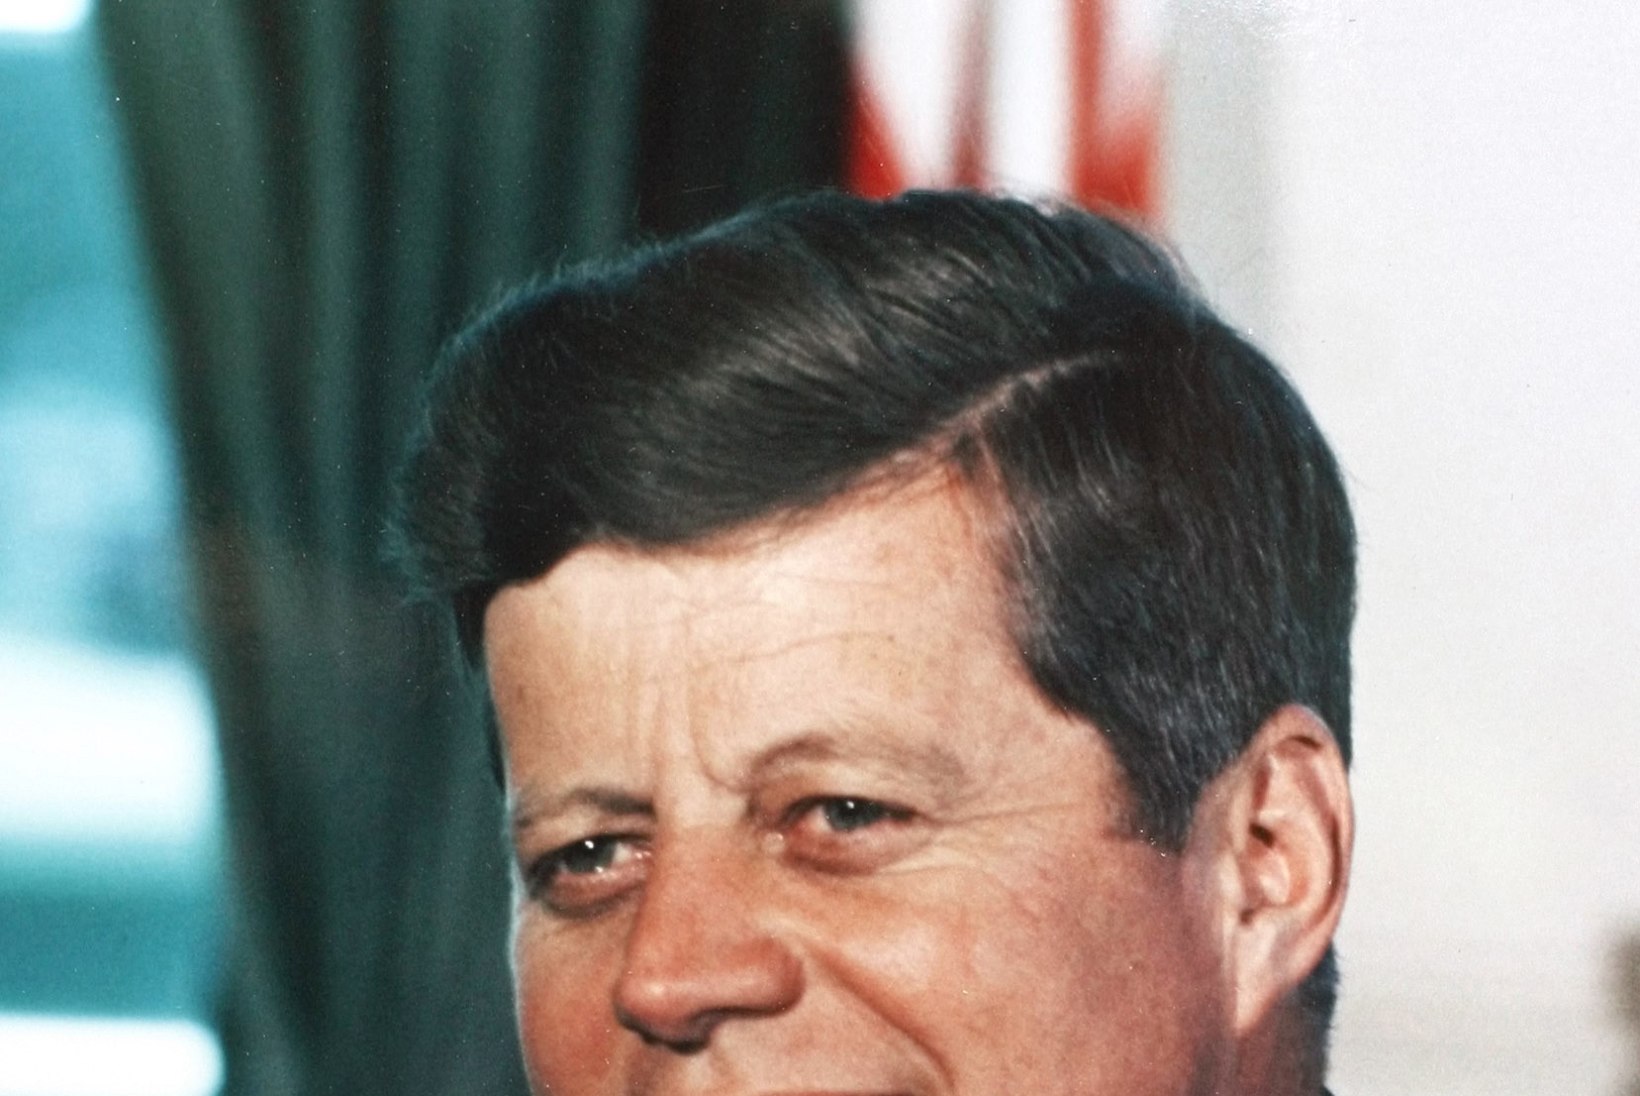 Kes varastas John F. Kennedy aju?